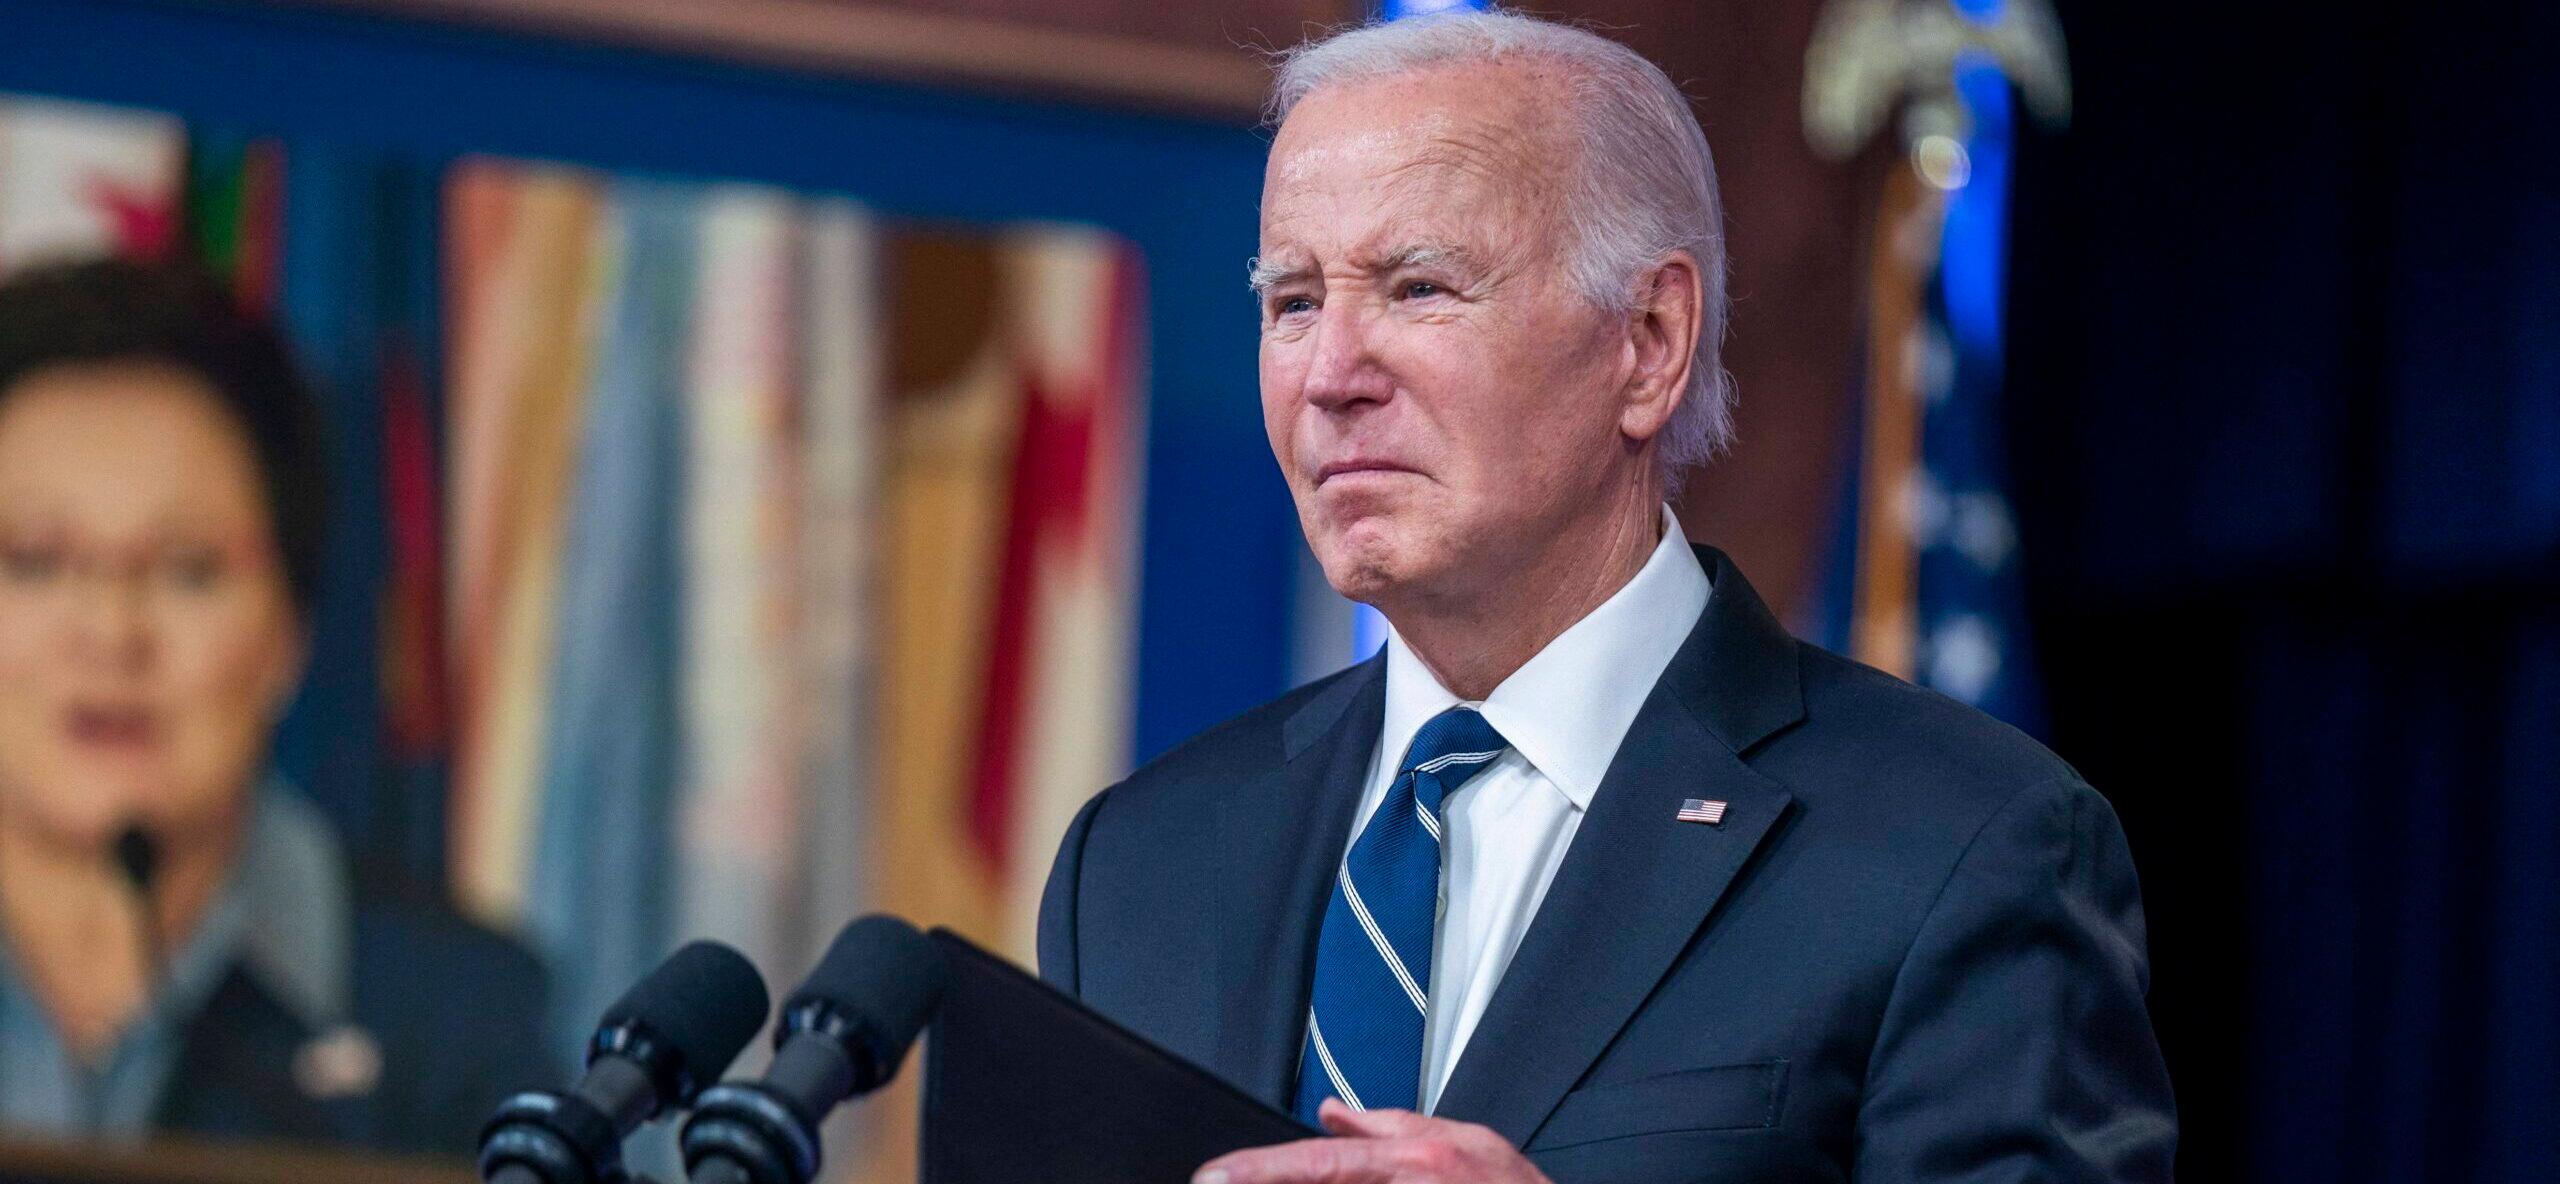 Joe Biden Faces MAJOR Backlash For ‘Disgusting’ Veterans Day Message